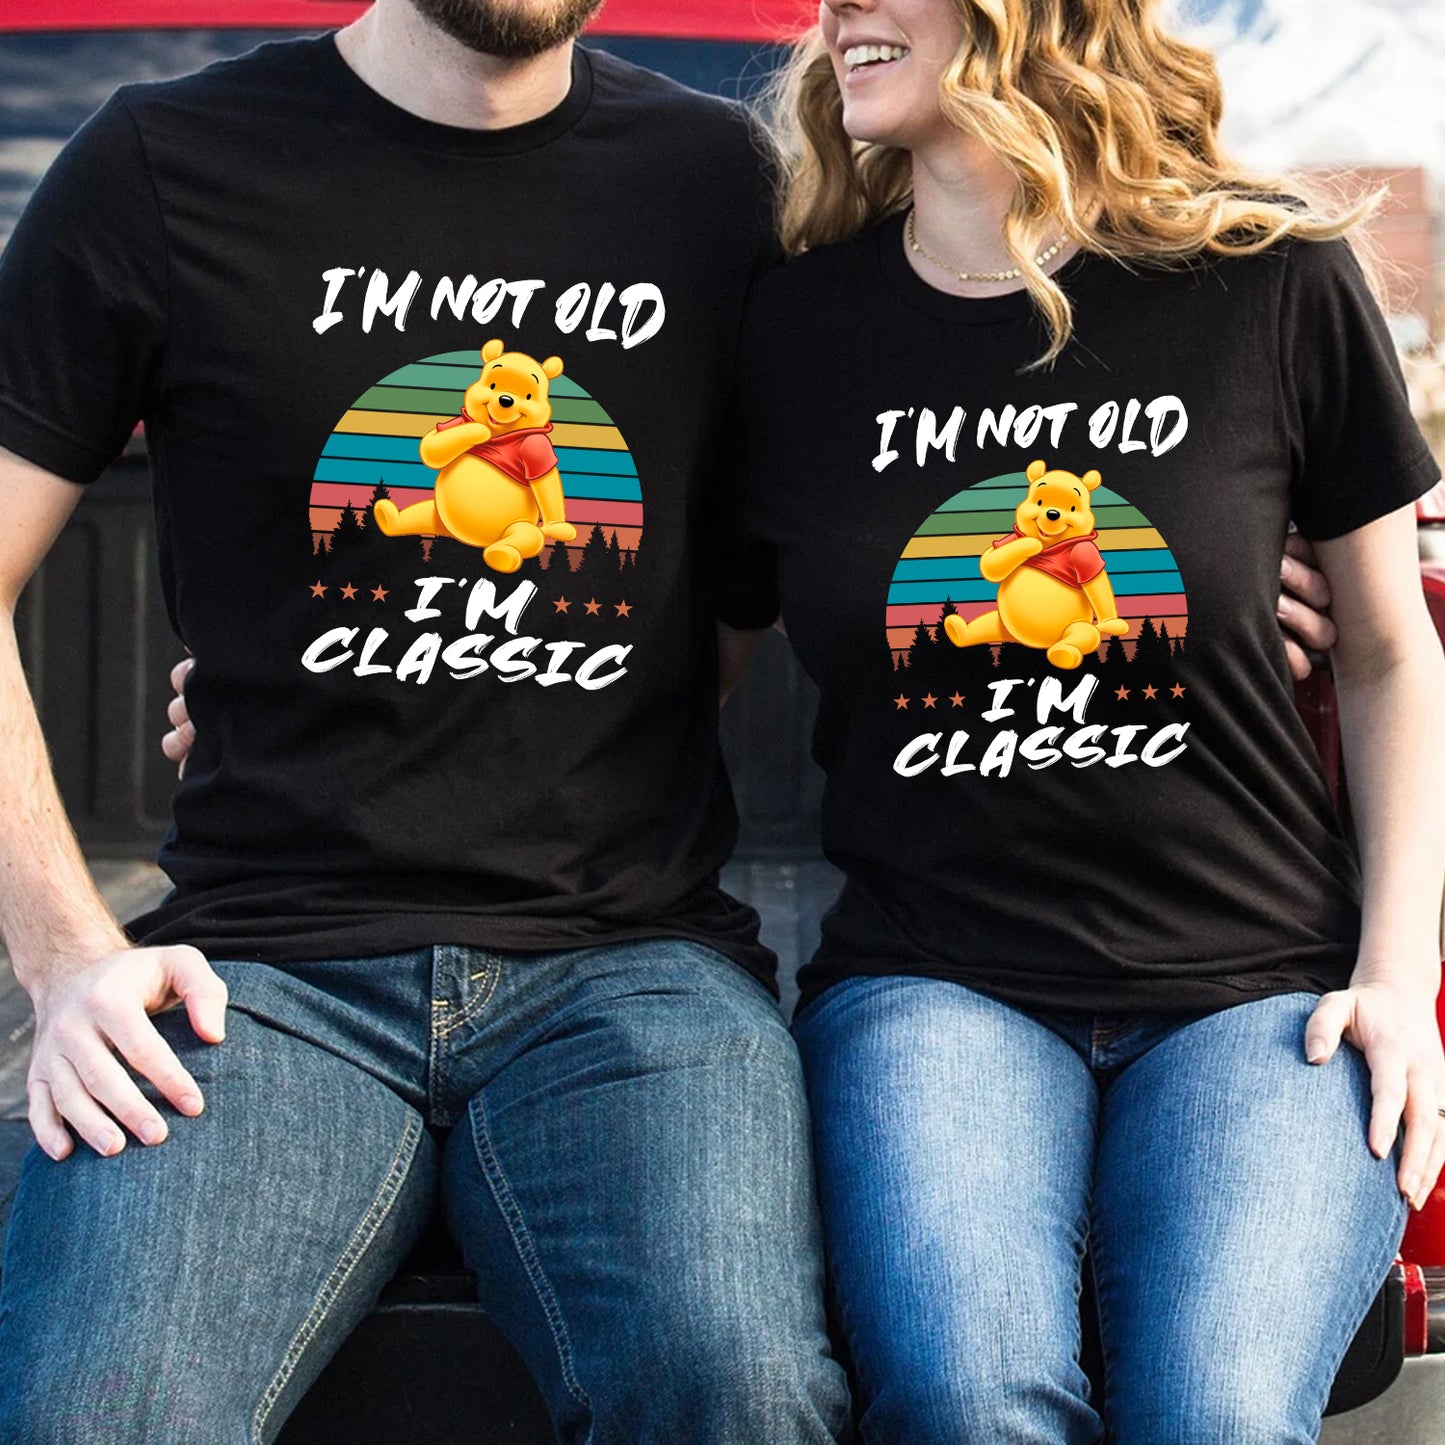 I am not Old, I am Classic - Unisex Half Sleeves T-Shirt